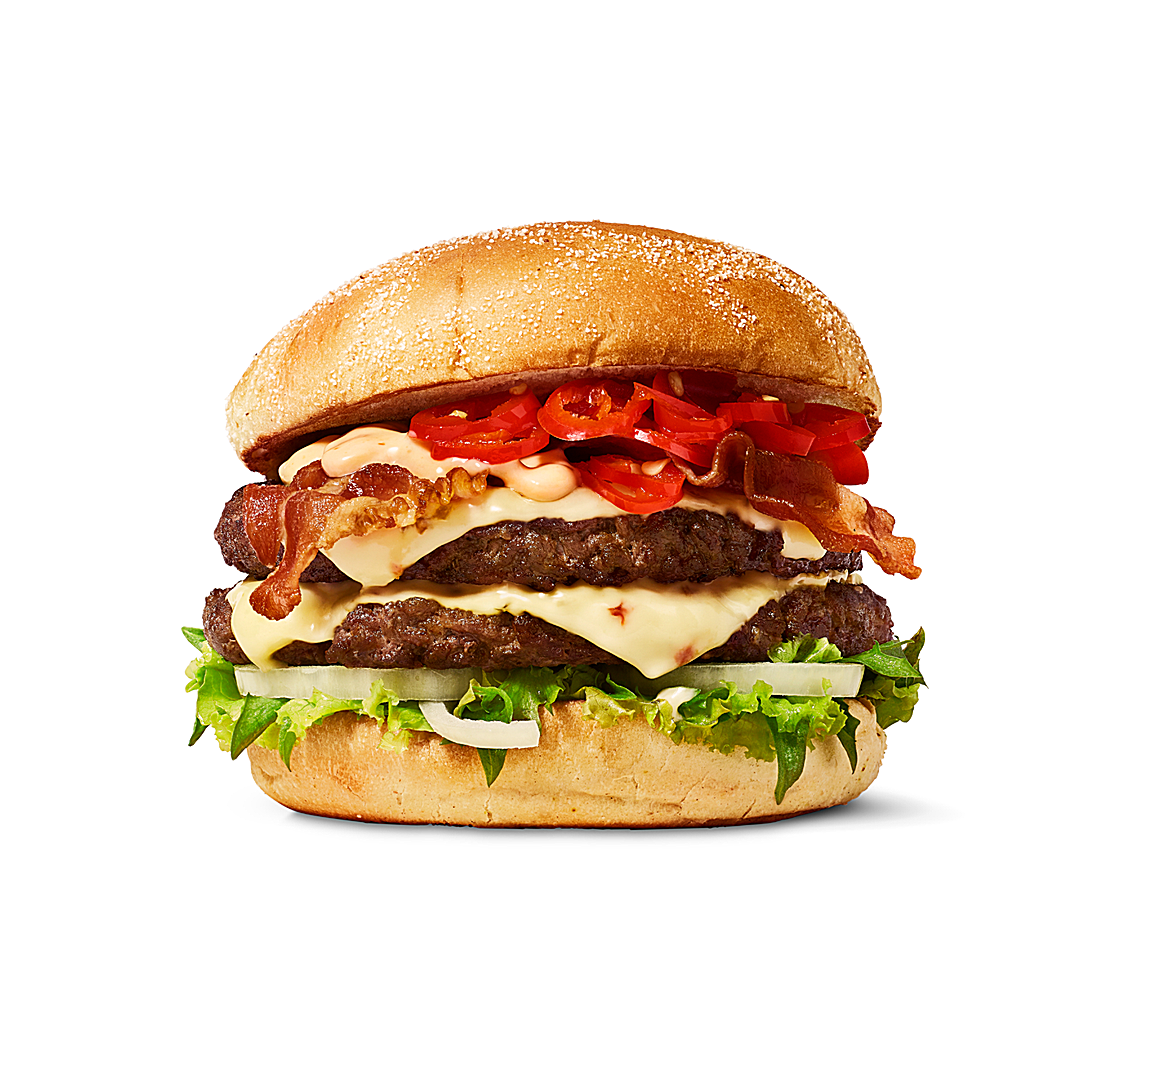 Pepper Jack ‘n’ Chili Bacon Burger